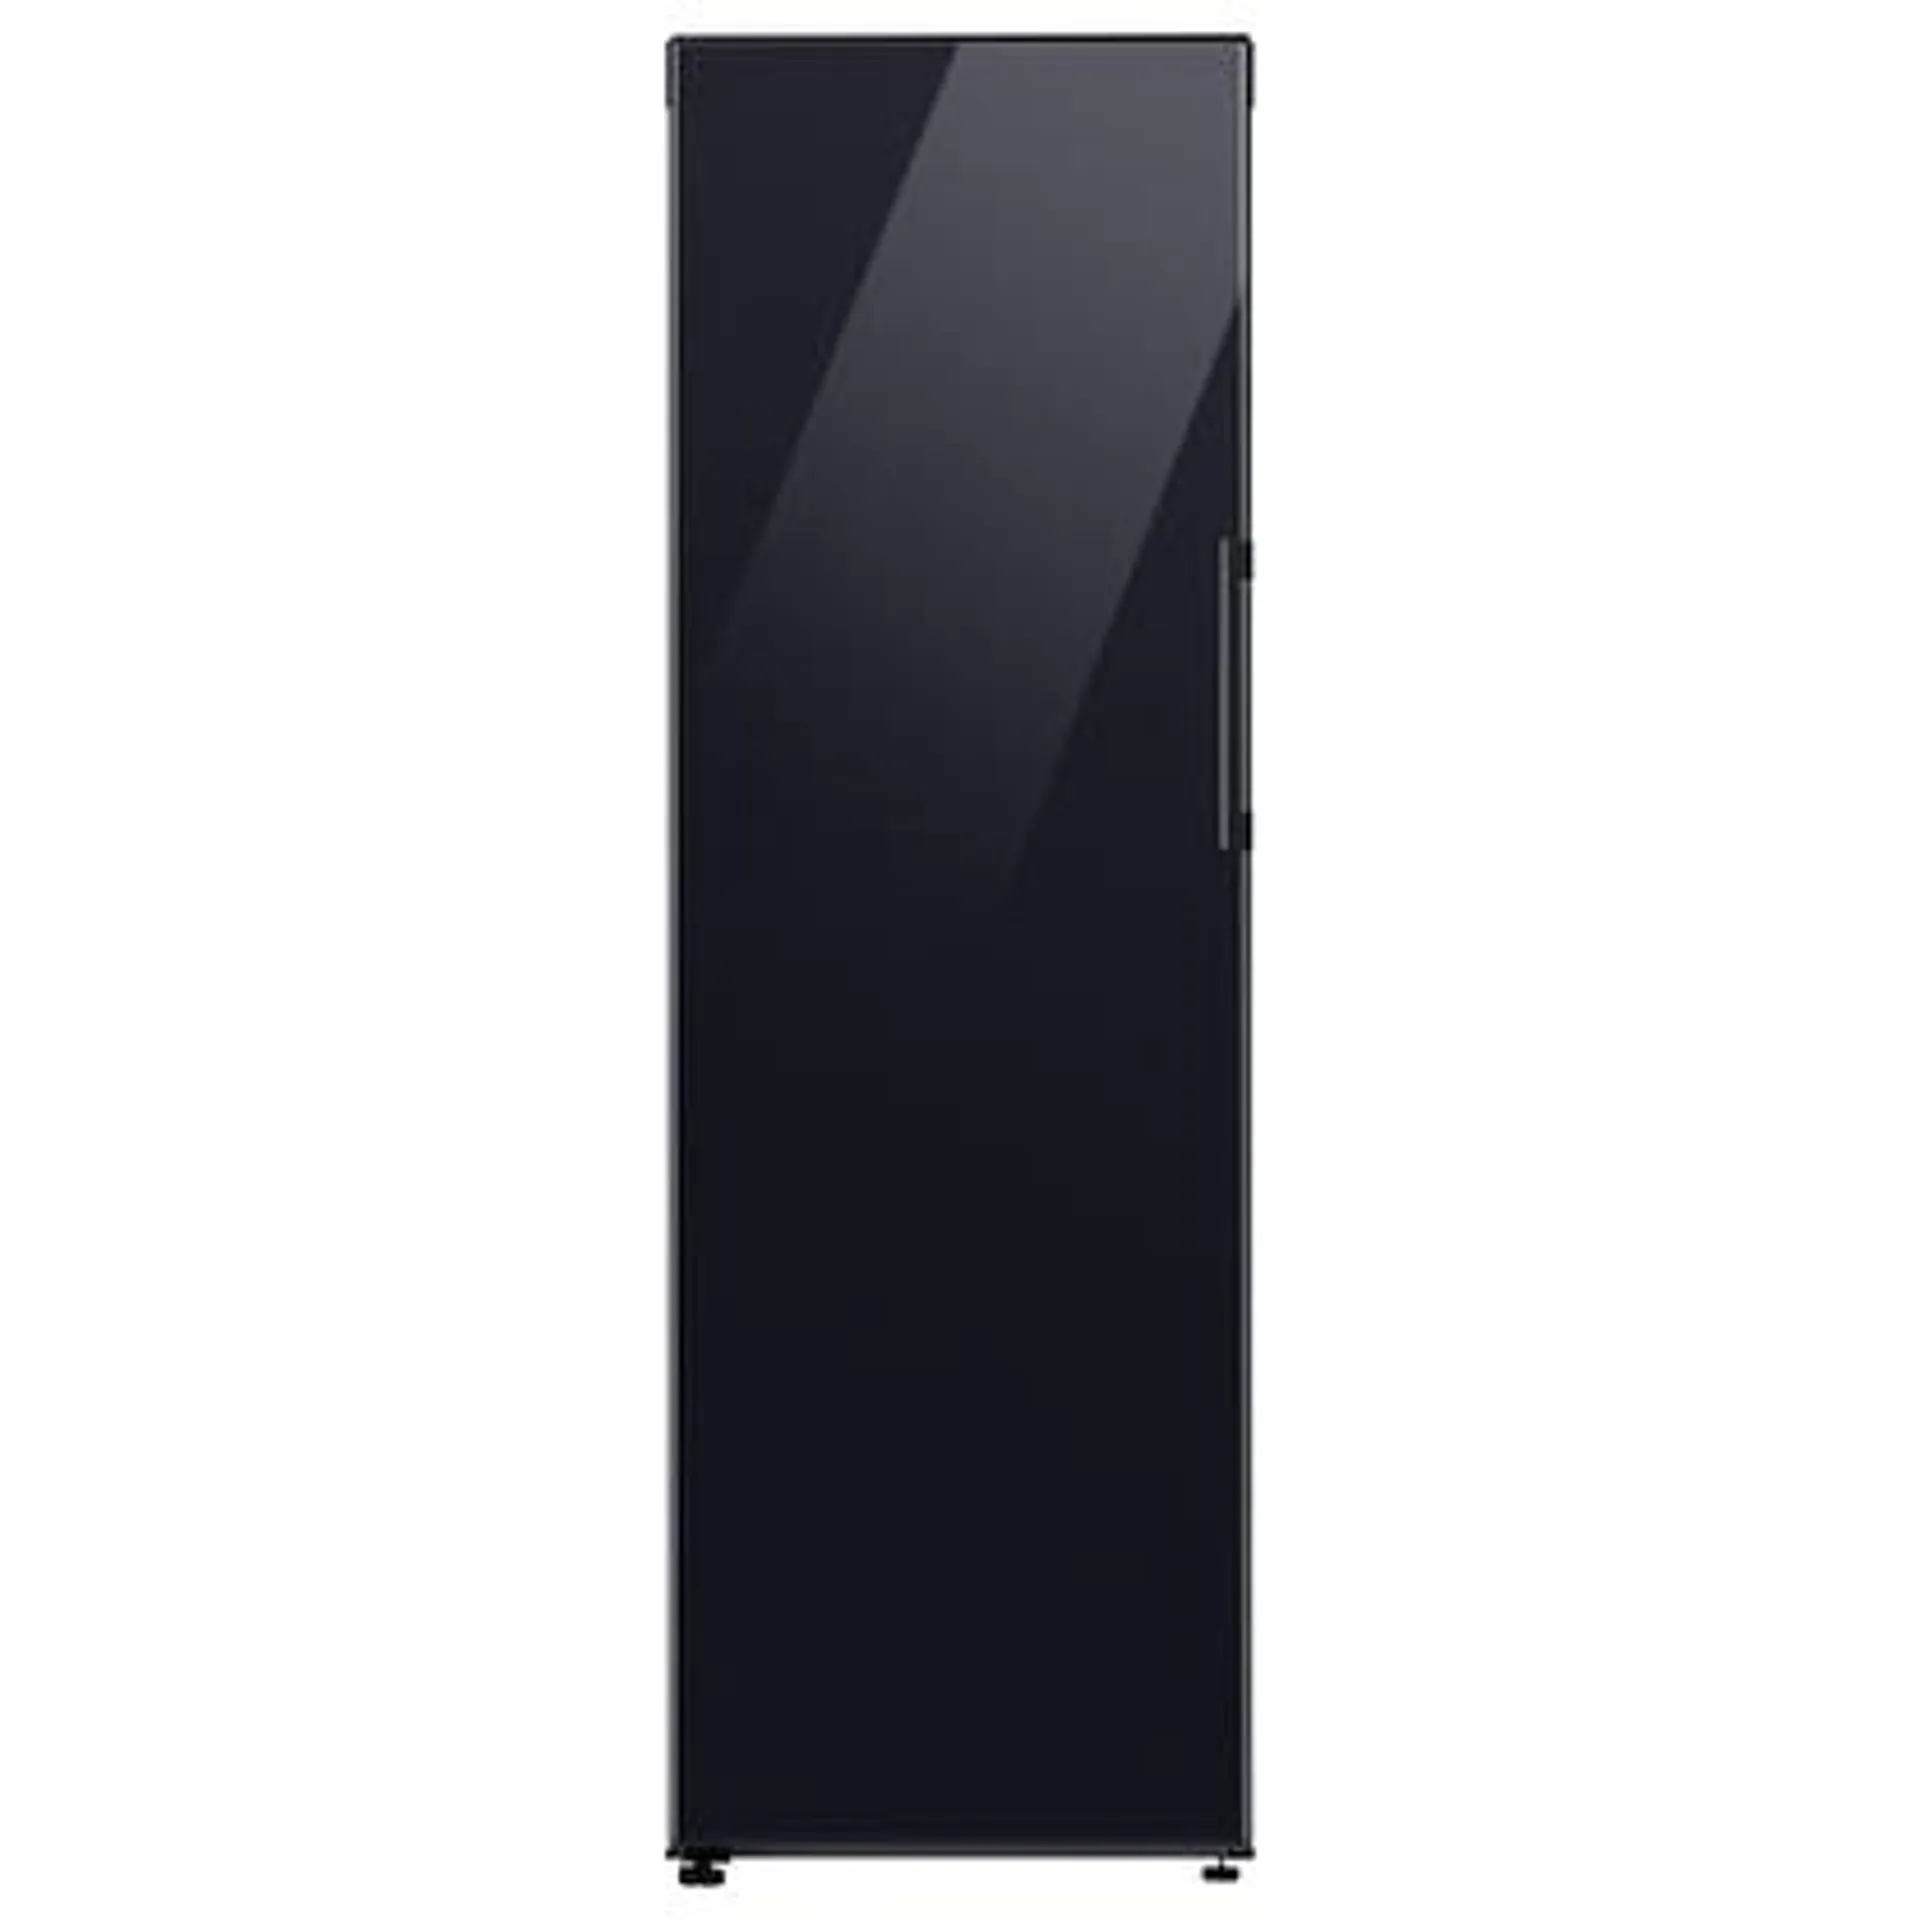 Samsung RZ32C76GE22 60cm Freestanding Frost Free Freezer – BLACK